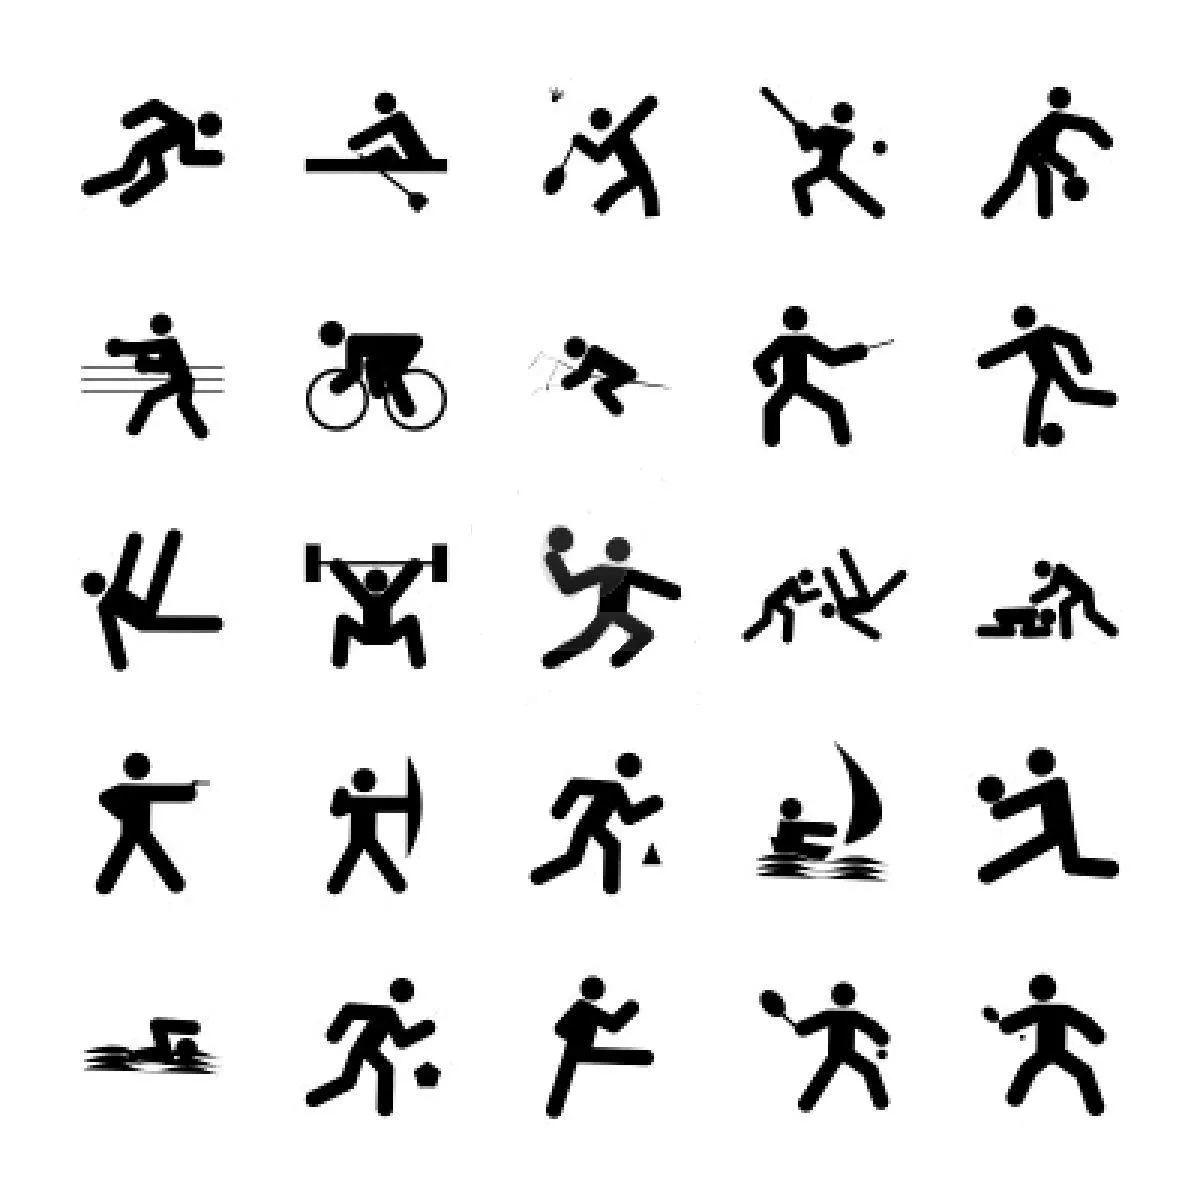 Deportes logos - Imagui